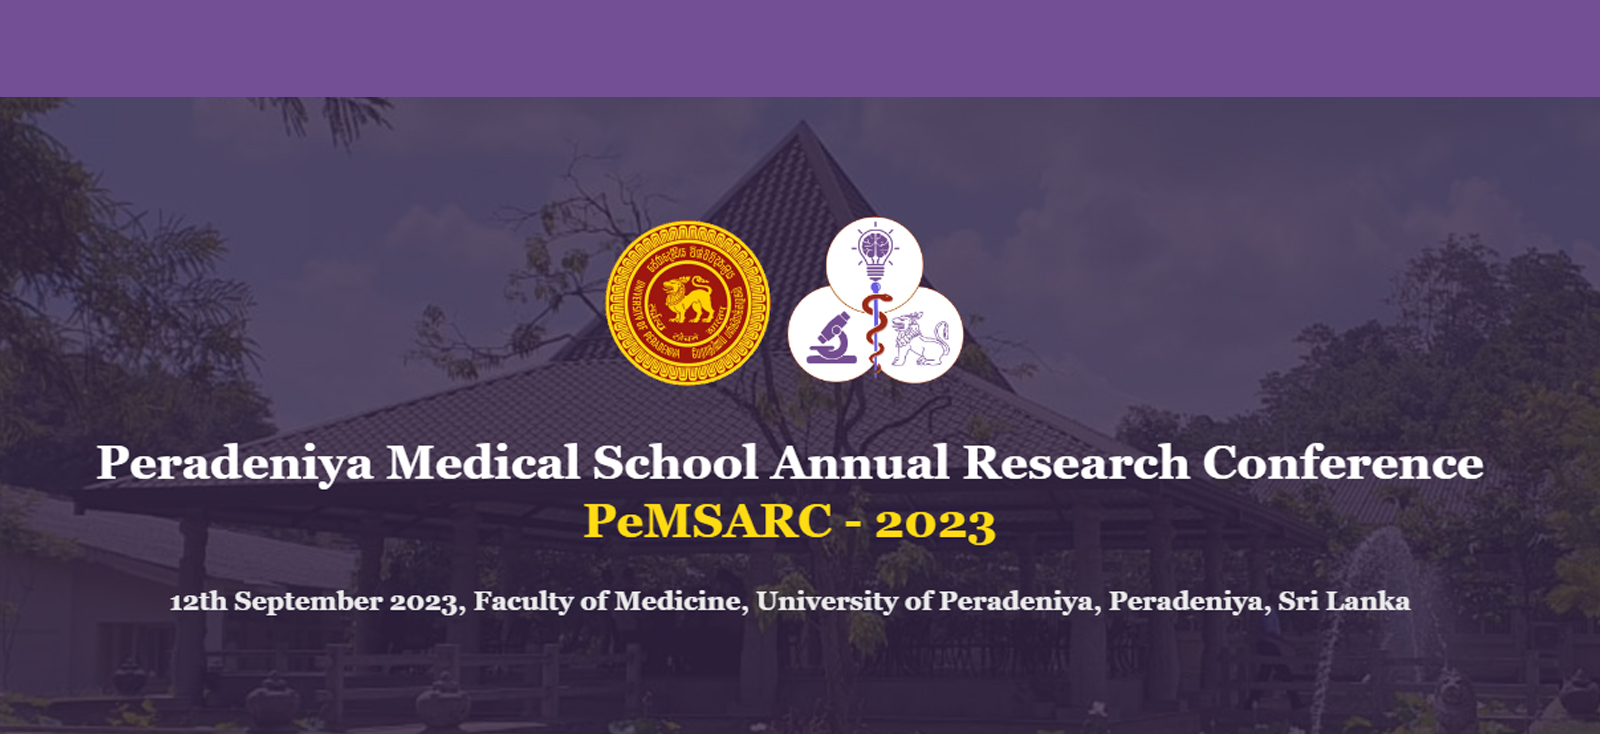 Peradeniya Medical School Annual Research Conference - PeMSARC 2023